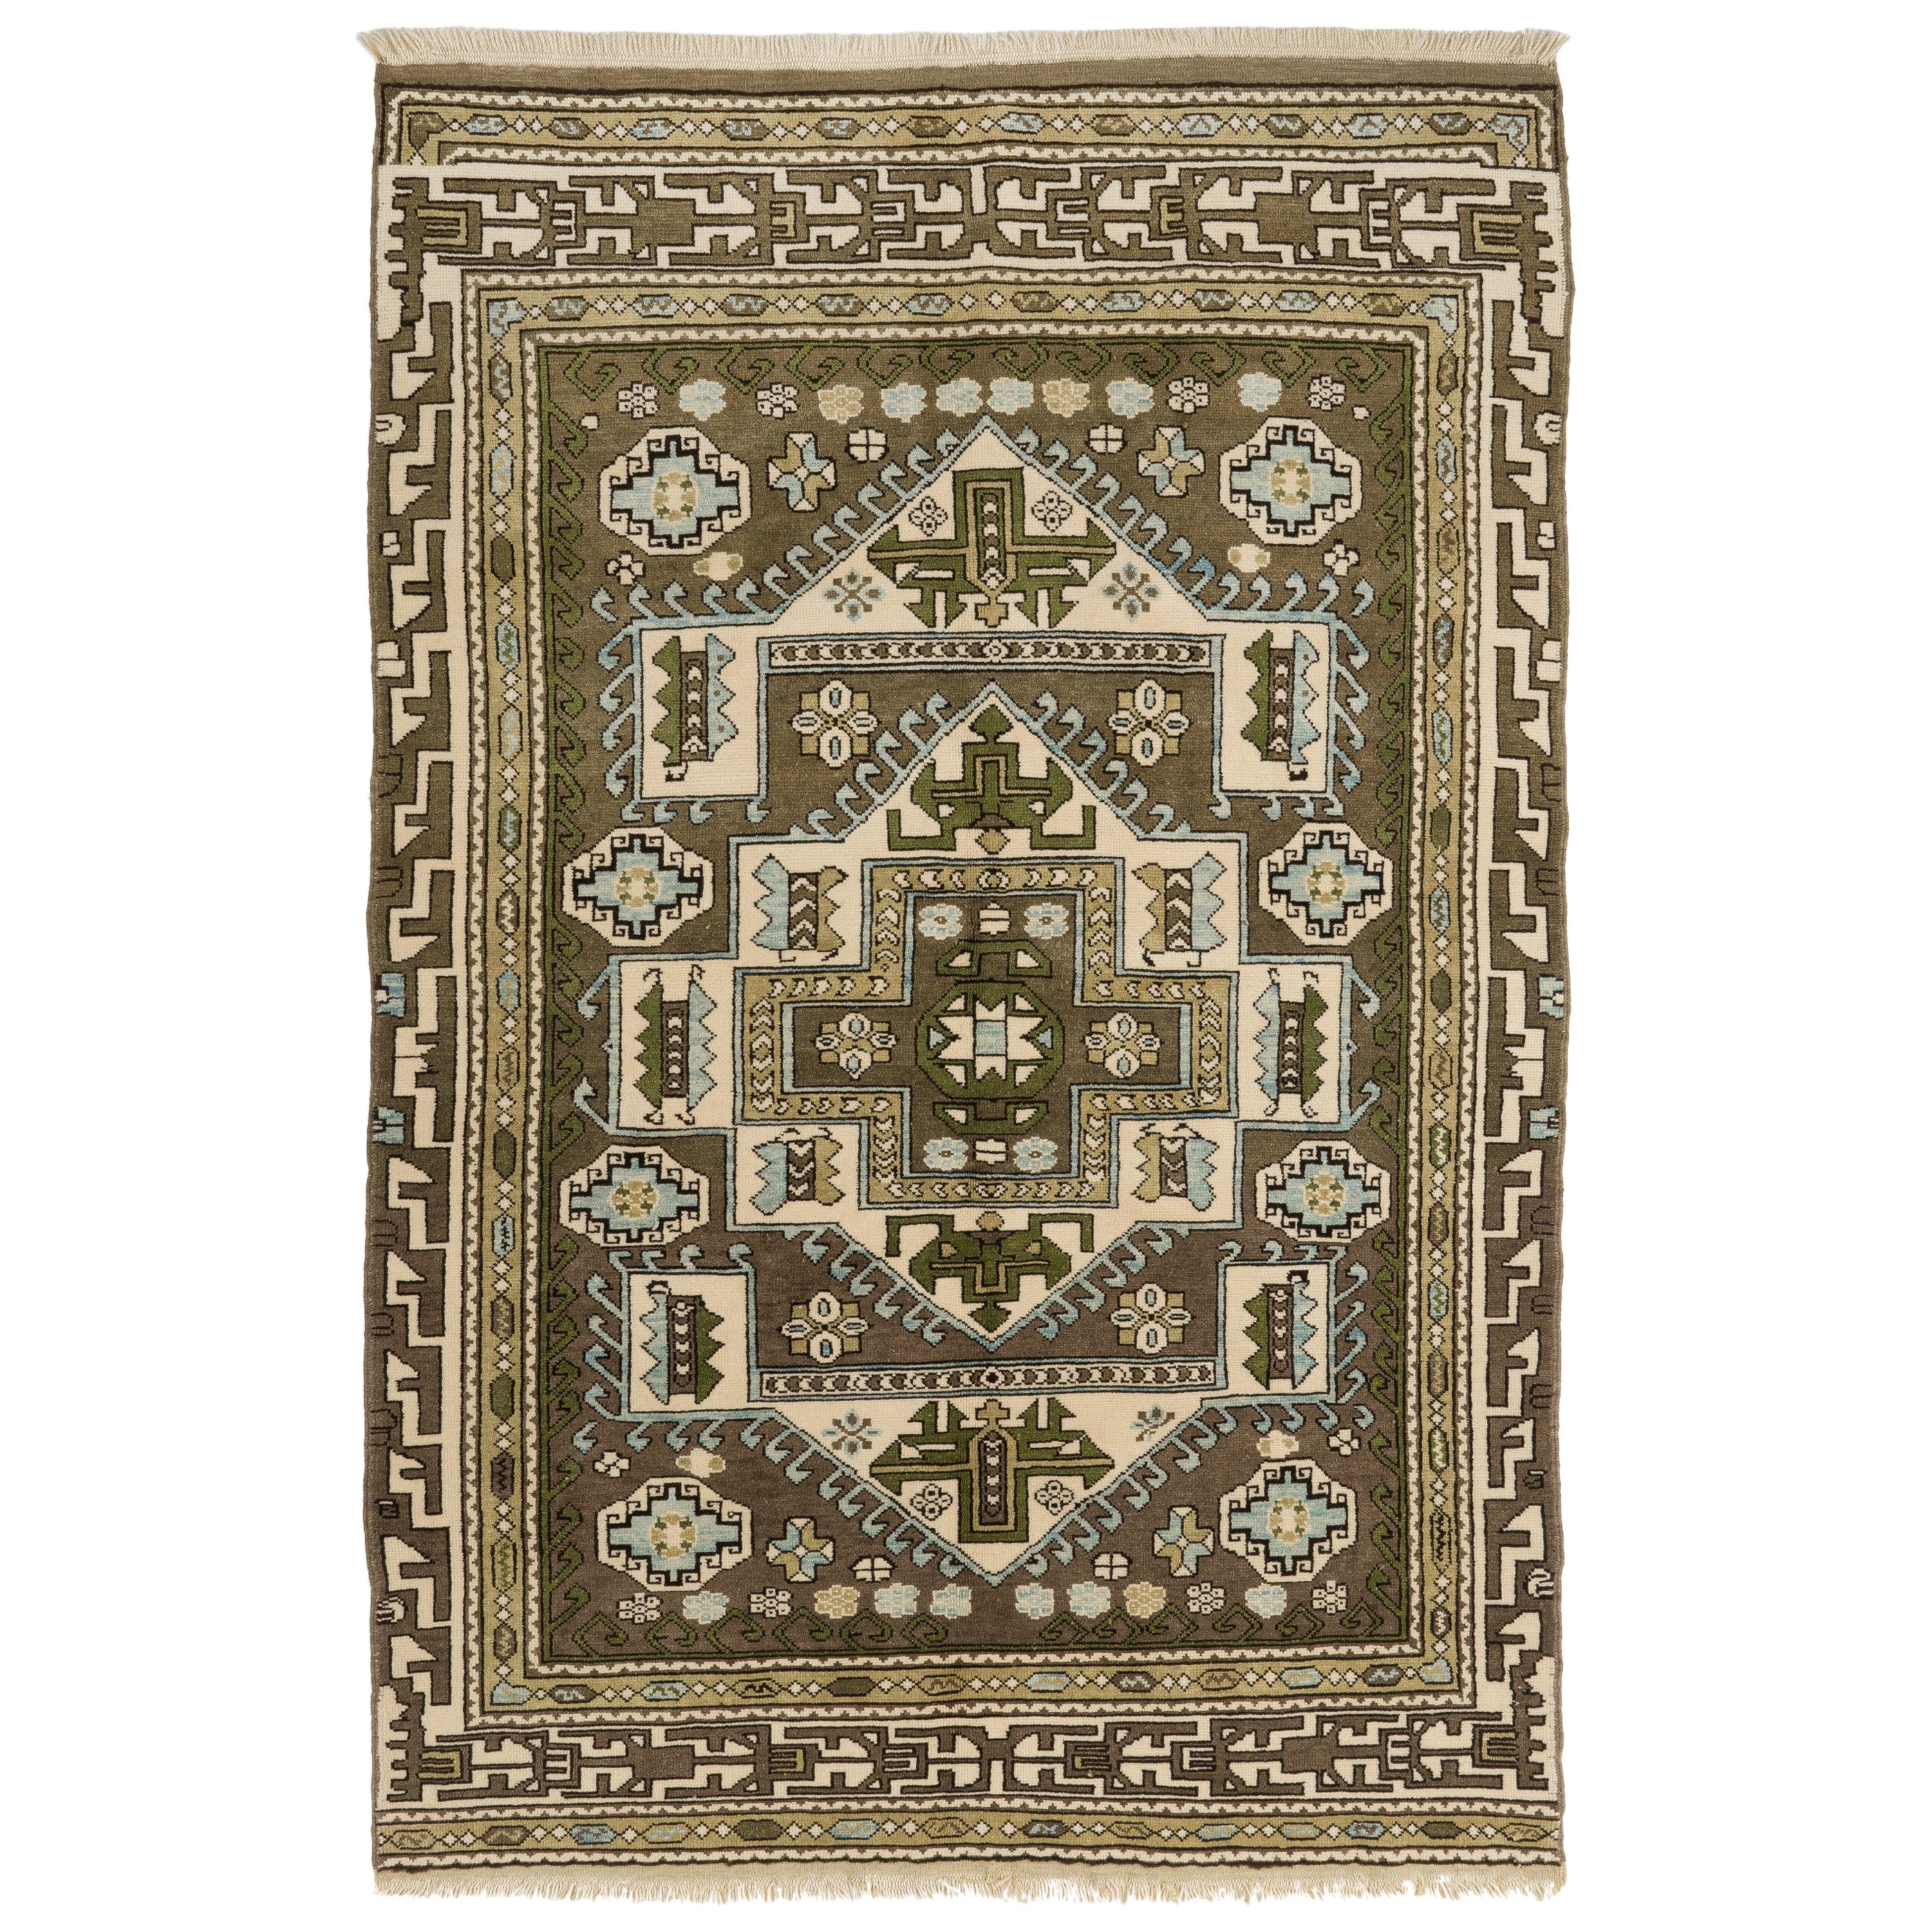 5'7 "x8' New Handmade Area Rug with Geometric Patterns, Decorative Turkish Carpet (tapis turc décoratif) en vente